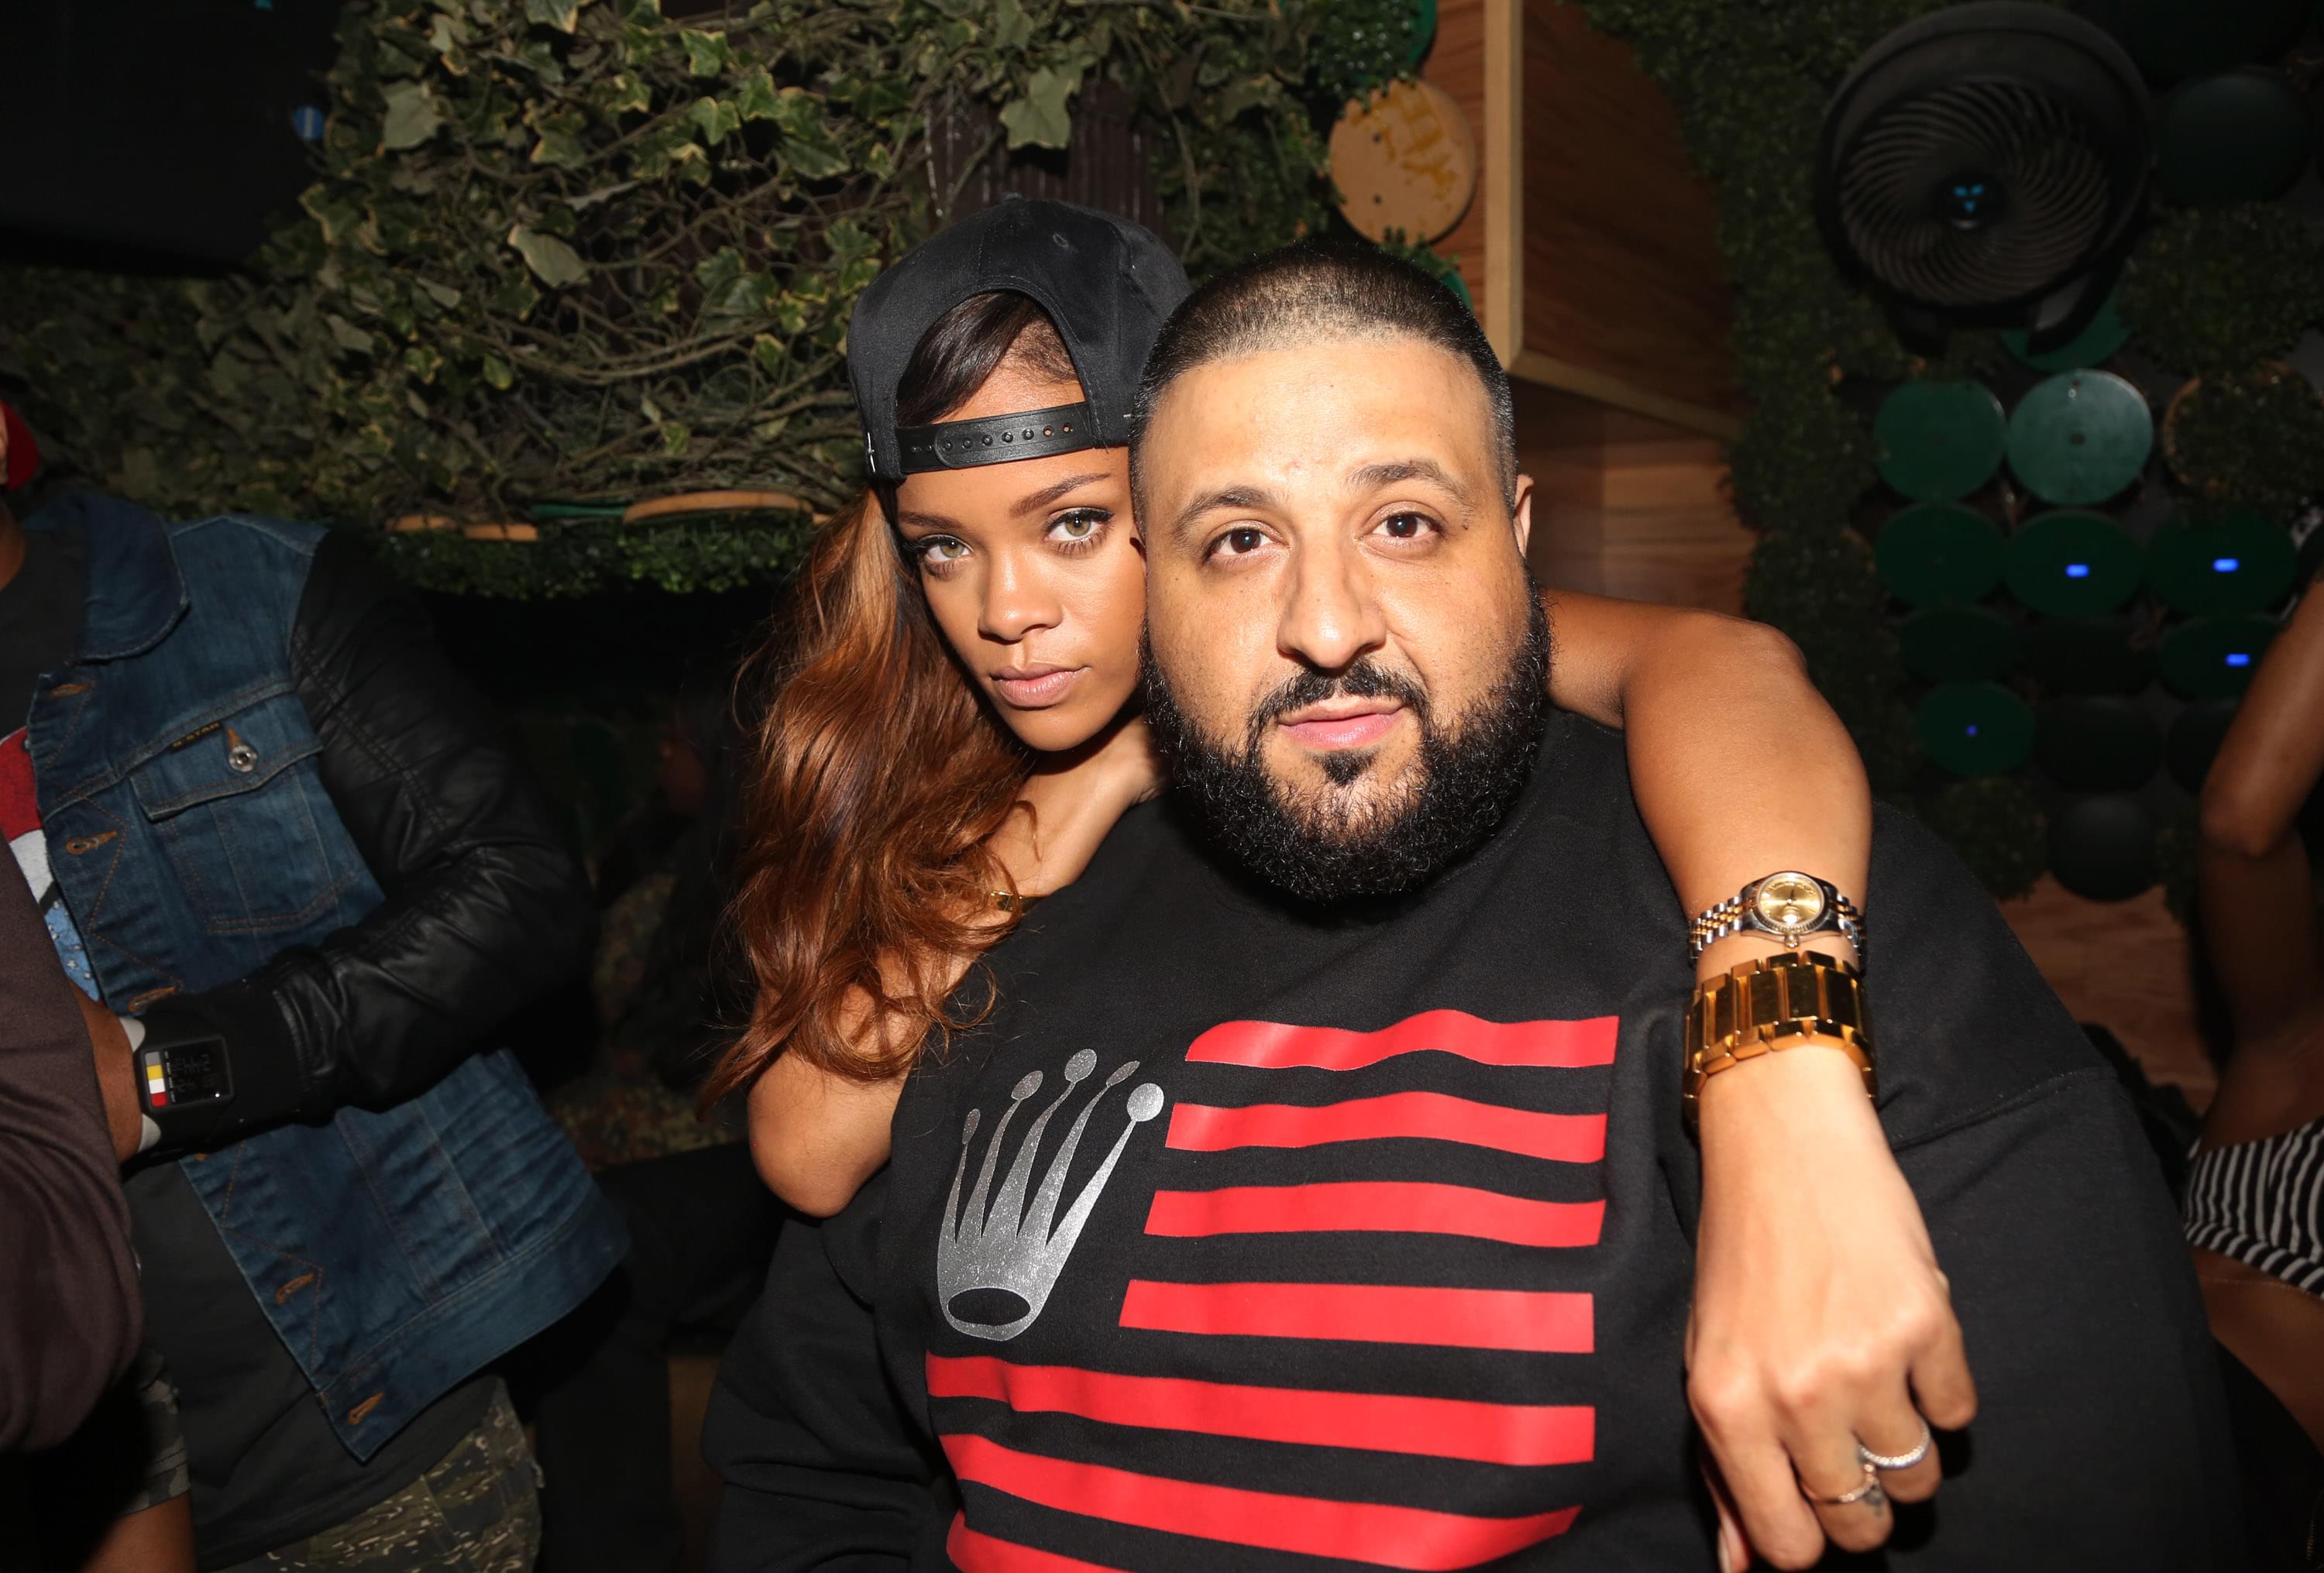 DJ Khaled’s “Wild Thoughts” Ft. Rihanna & Bryson Tiller Hits #1 On The Hip-Hop Songs Chart